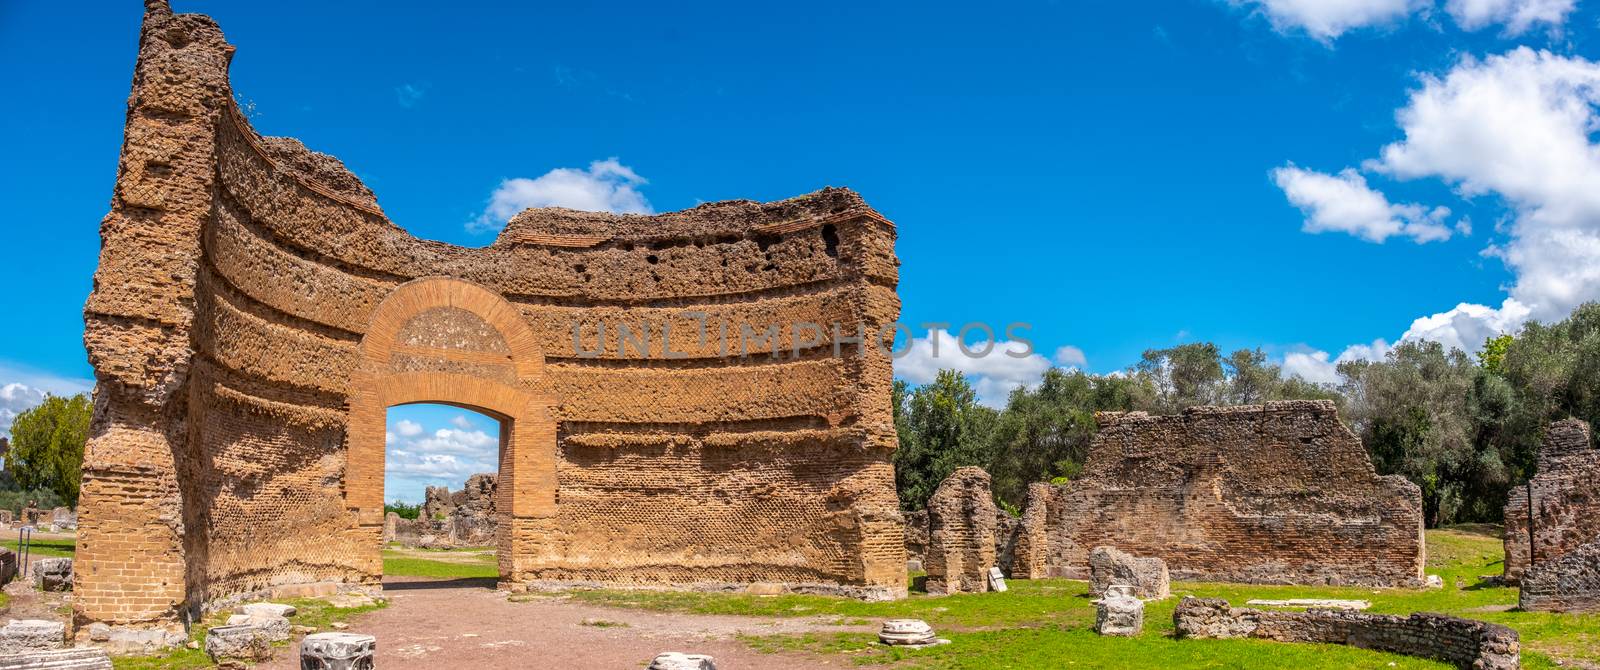 roman ruins panoramic Villa Adriana in Tivoli Rome - Lazio - Italy crumbled gate of the Ninfeo palace .